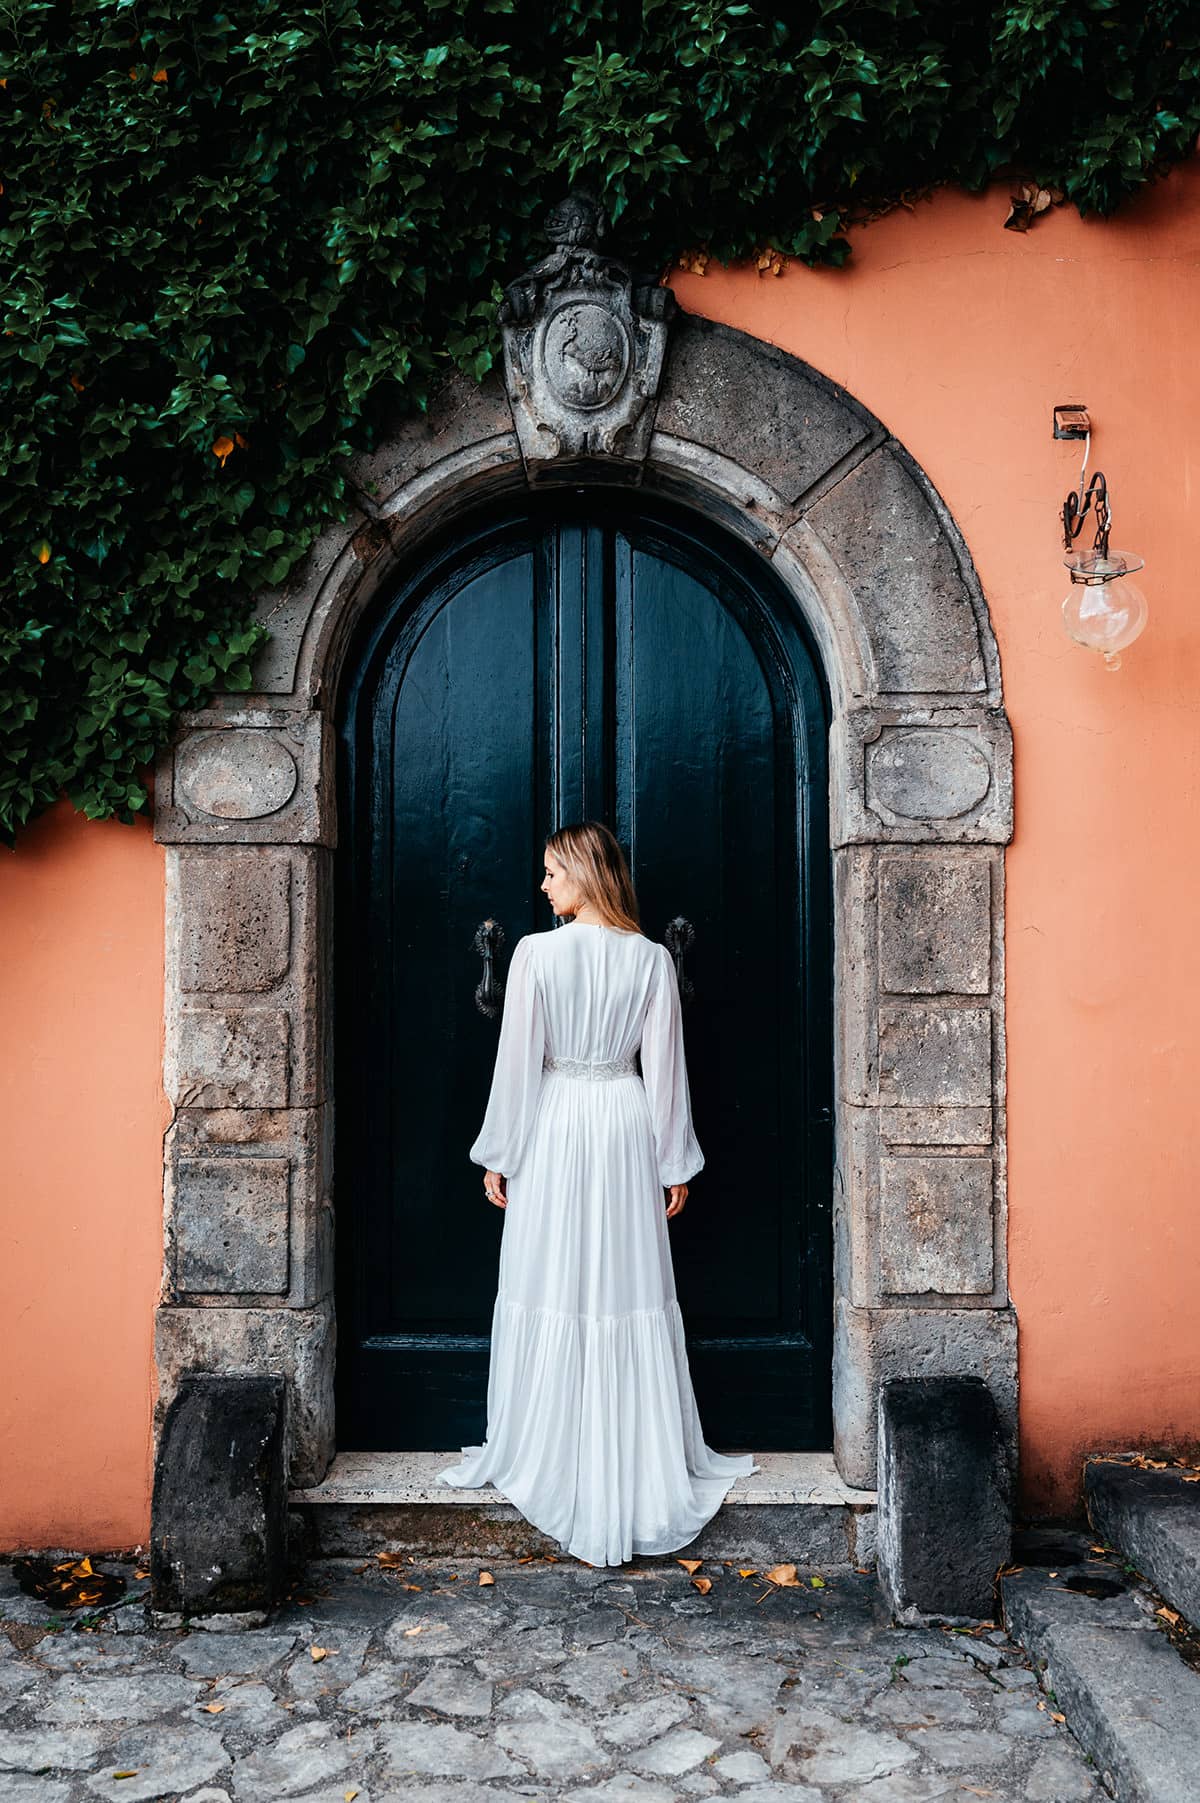 Intimate Wedding Photography Amalfi Italy - emiliano russo